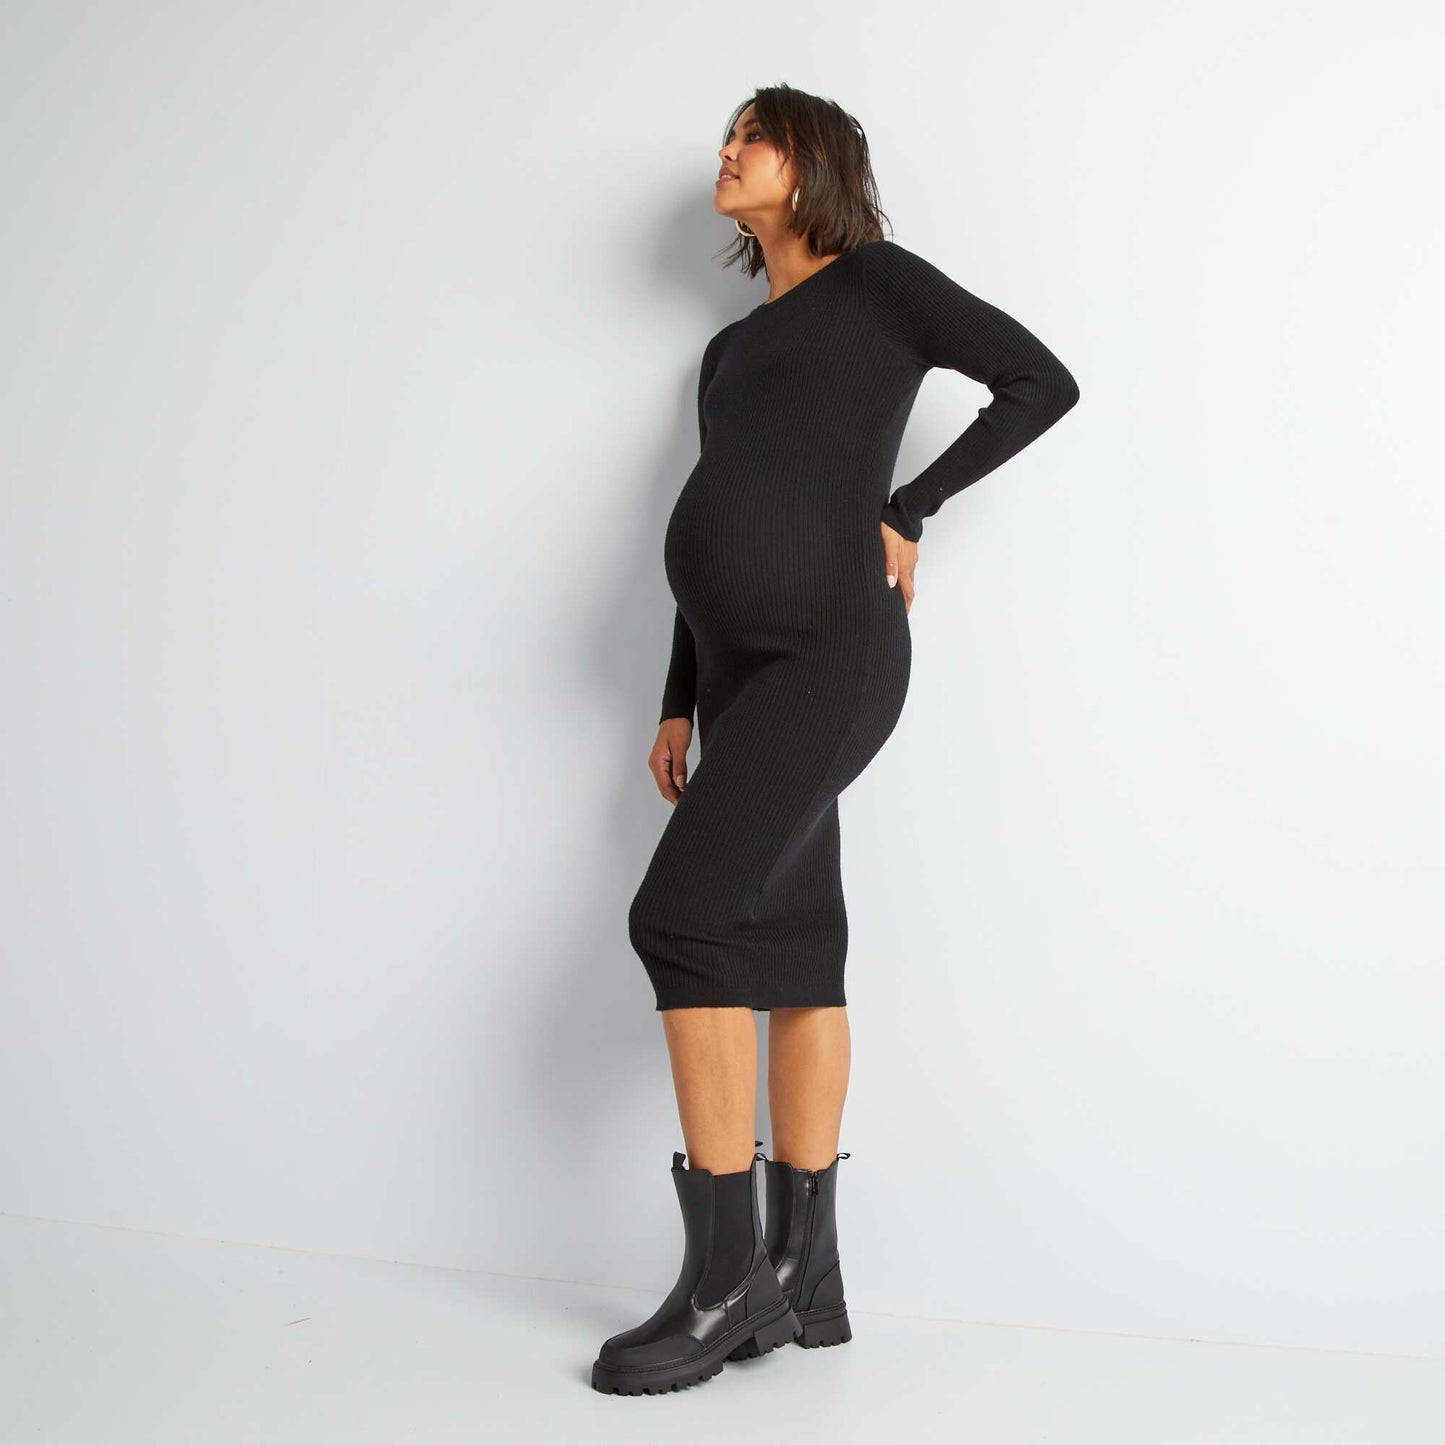 Maternity dress black